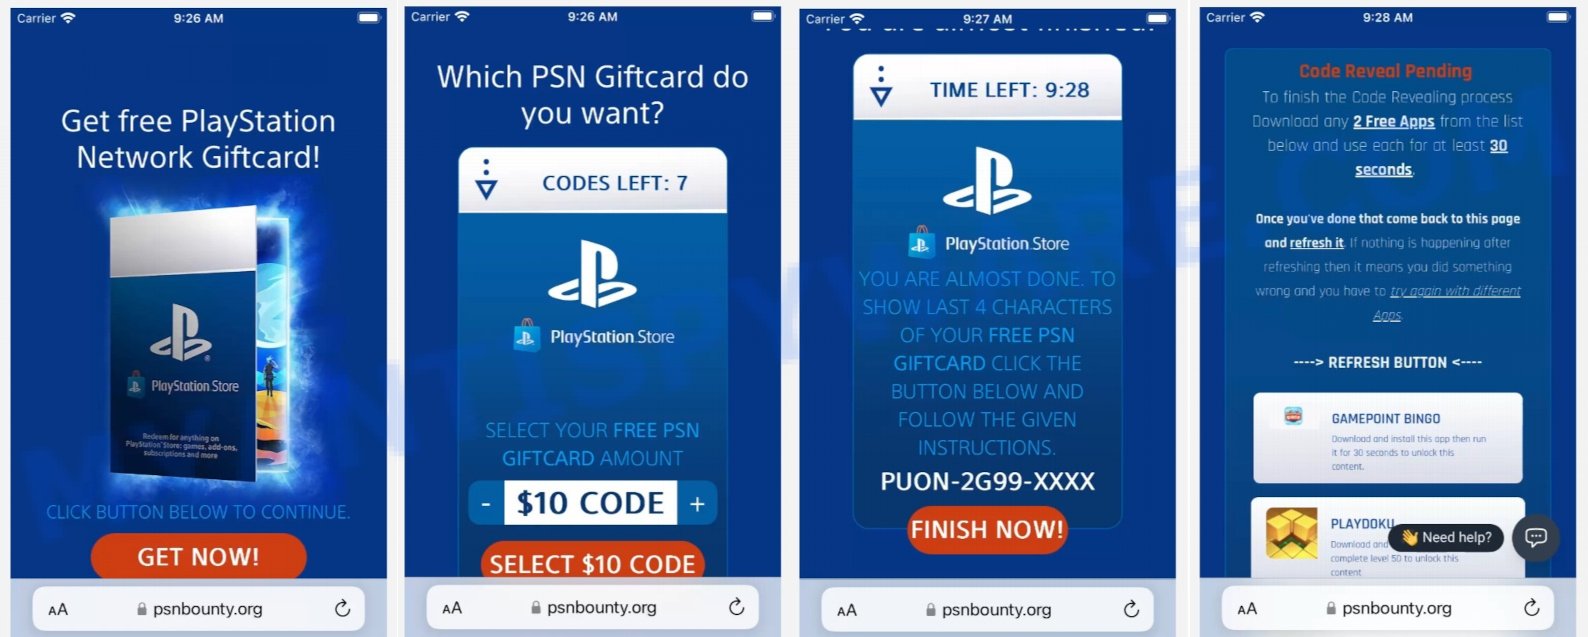 Psnbounty.org PSN Giftcard Codes Generator Scam